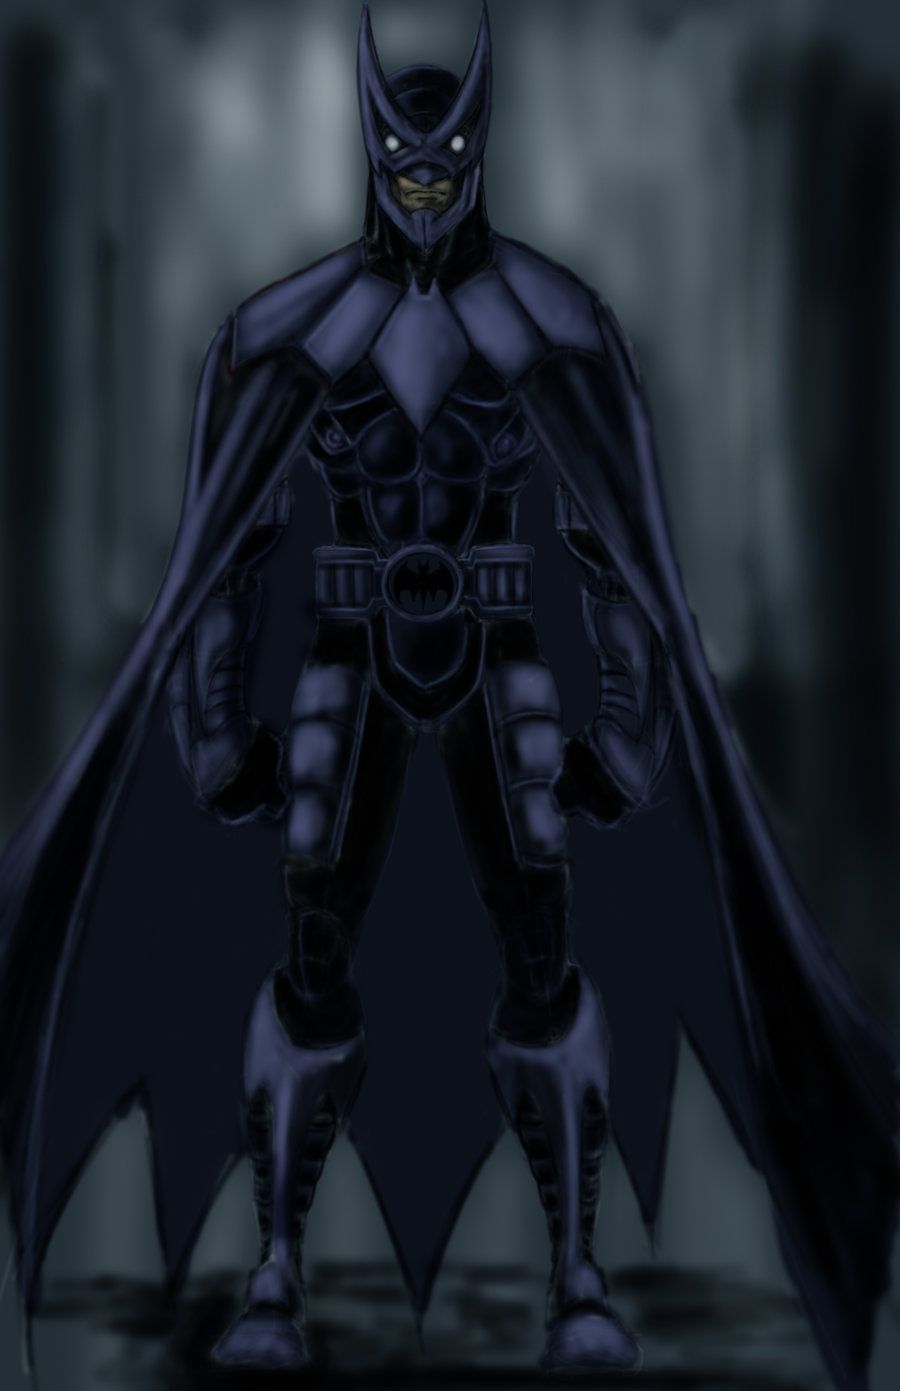 batman owlman costume front view. Batman, Superhero villains, Comic heroes